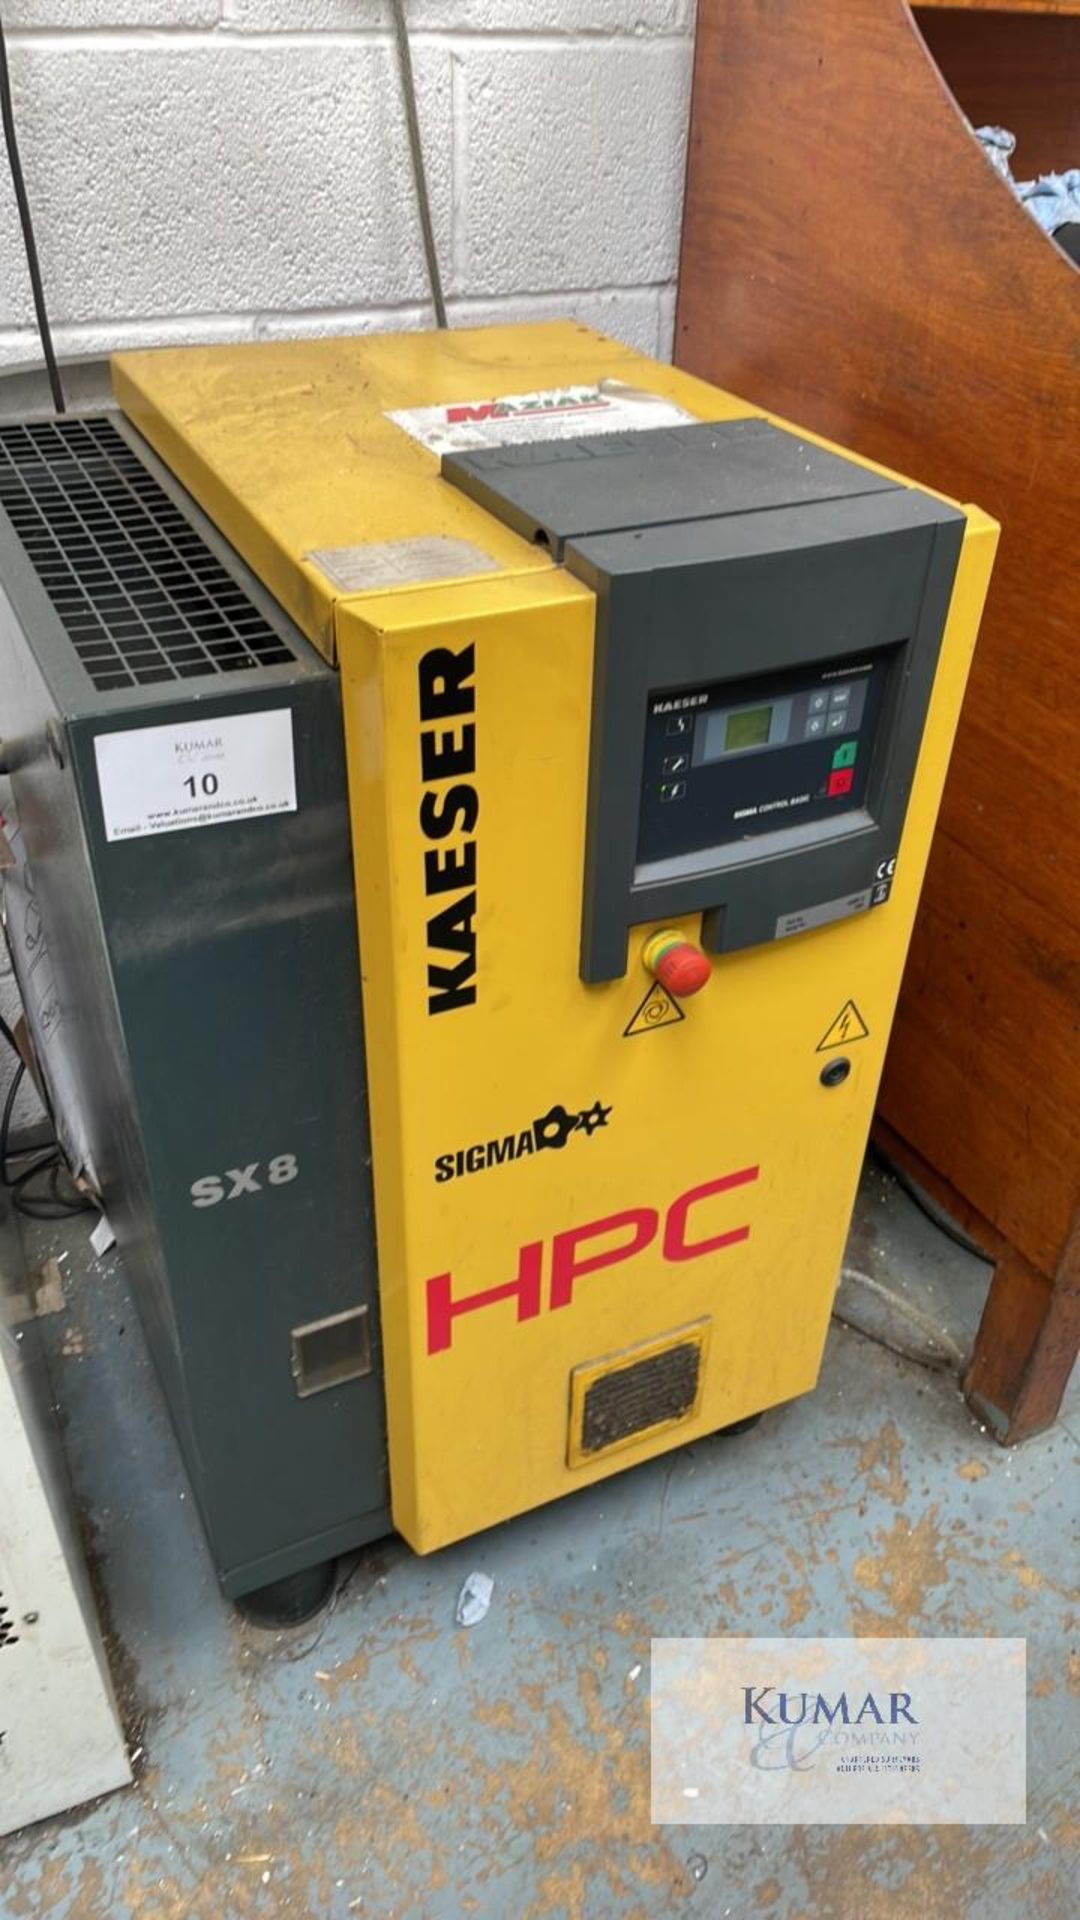 Kaesar HPC SX8 Screw Compressor, Serial No. 1360, 5.5KW (2011) with Domnick Hunter Dryer, Air